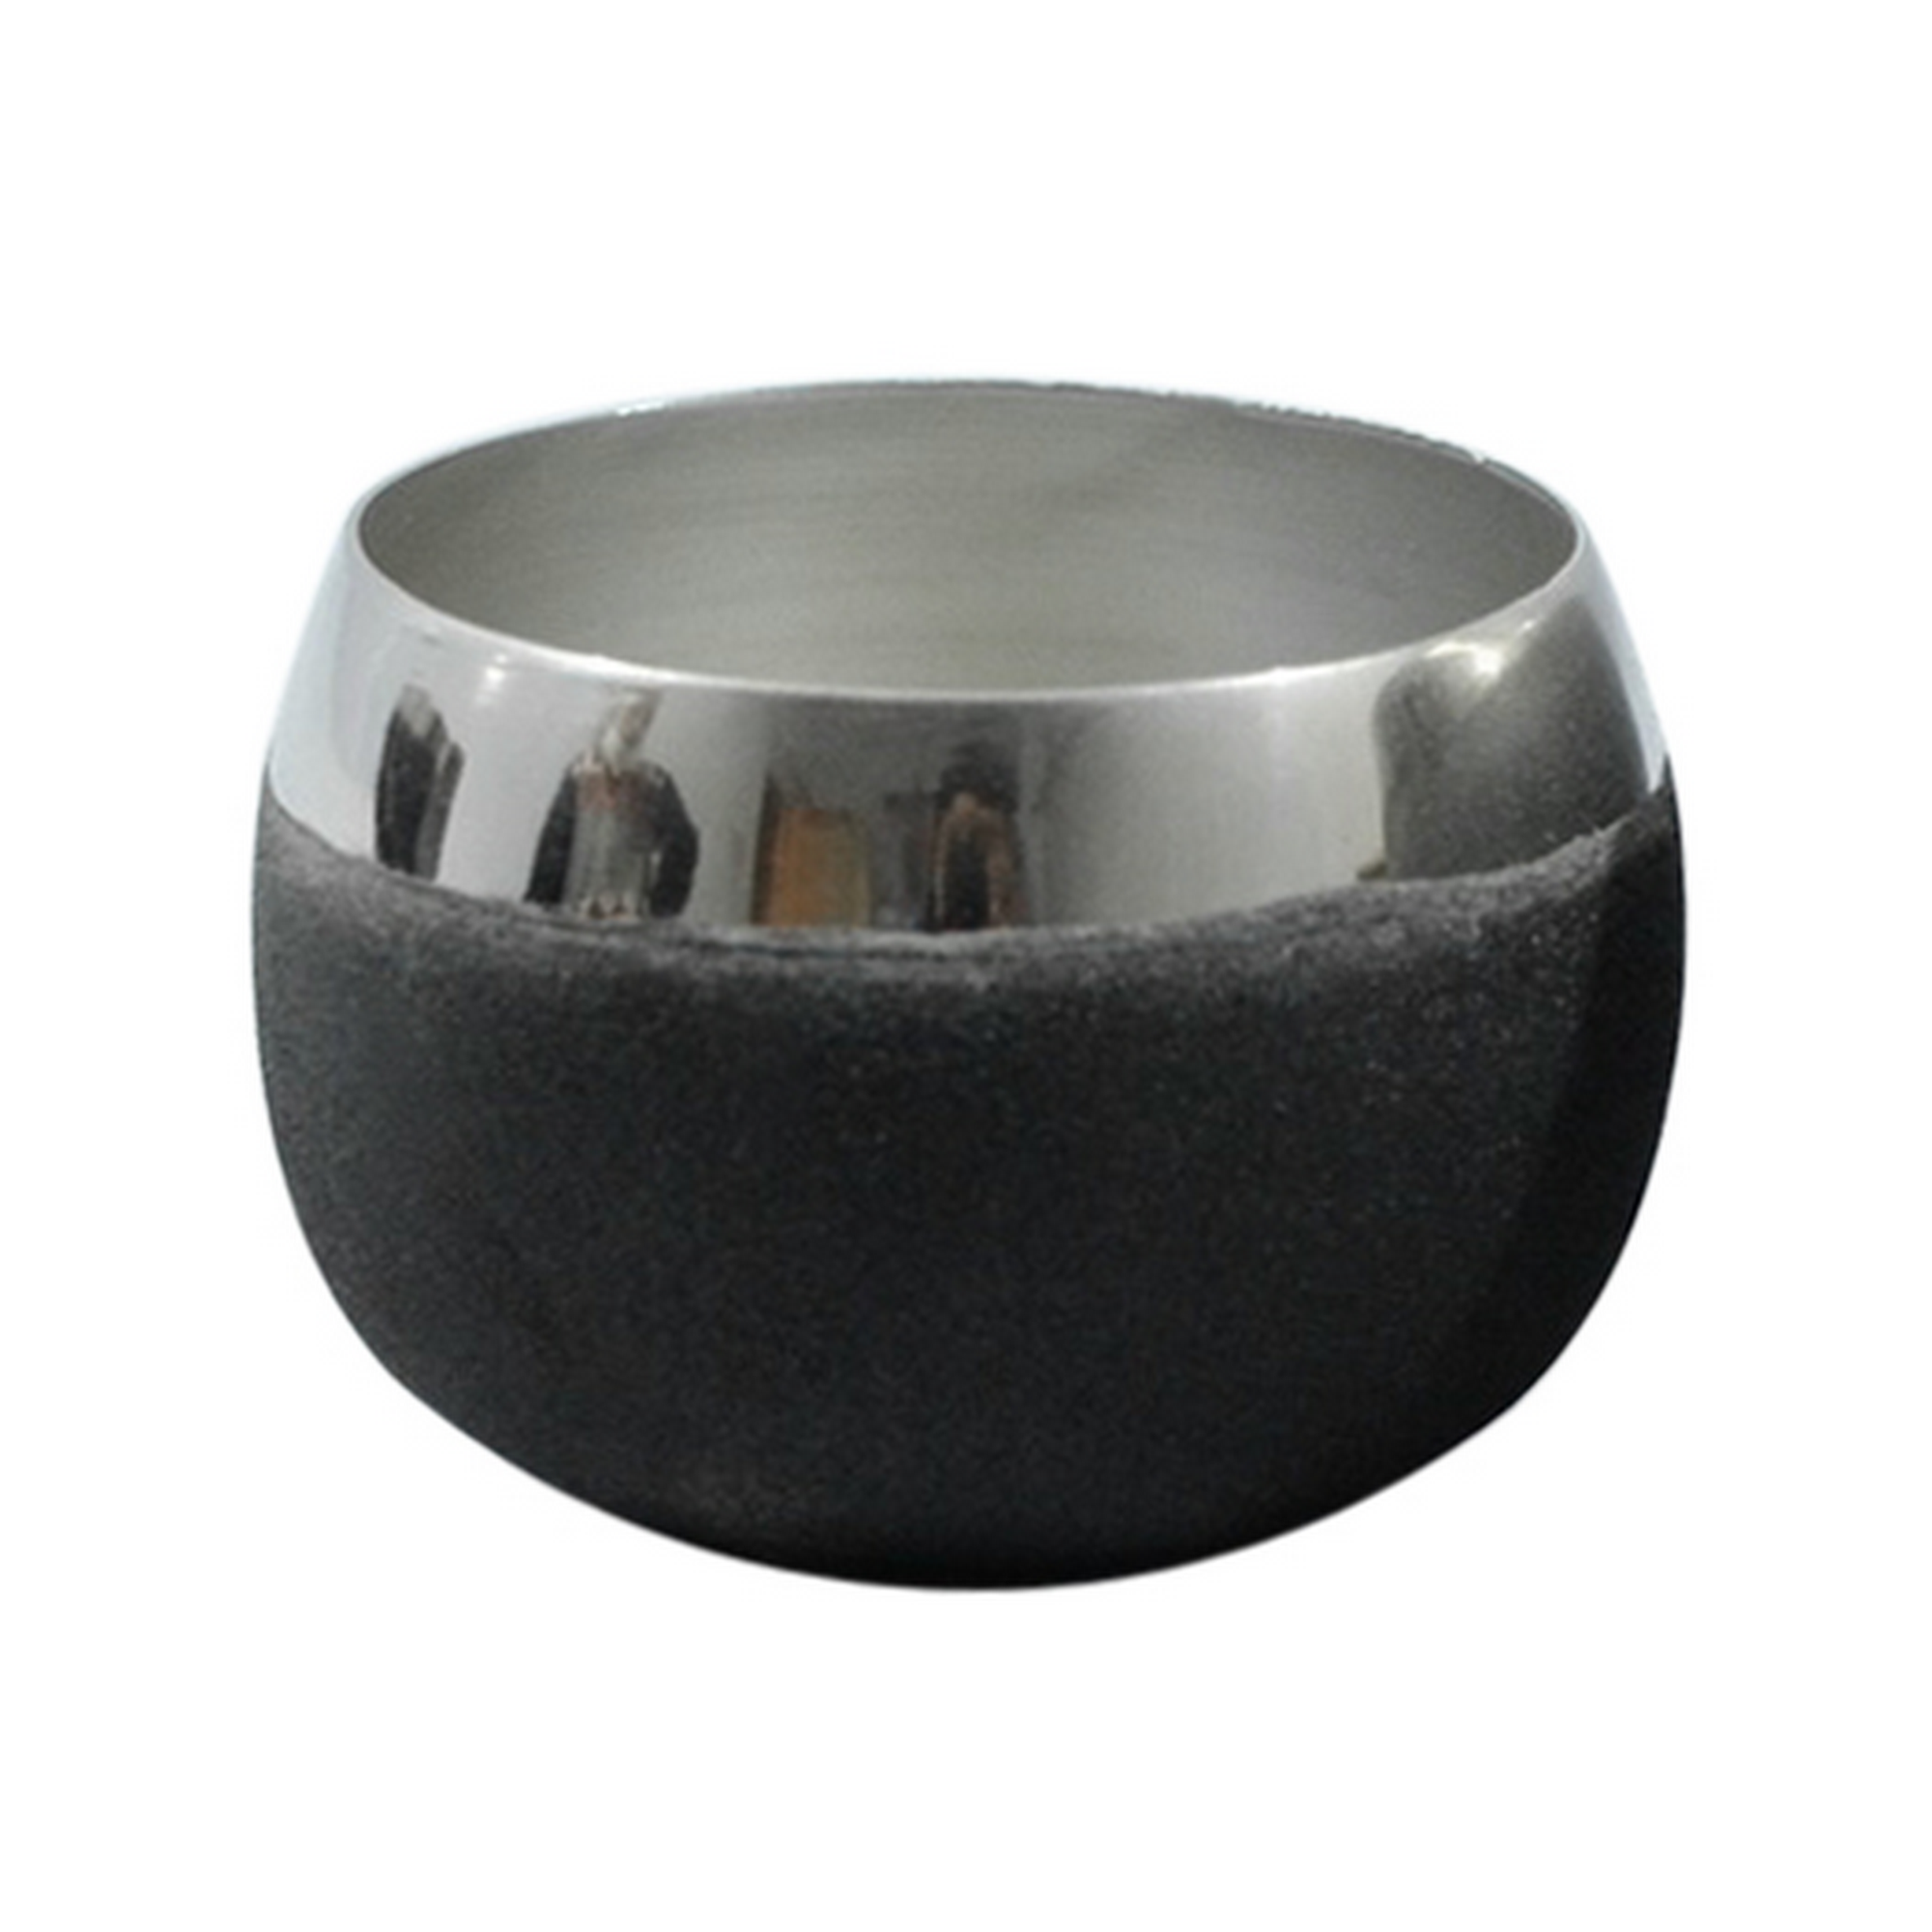 Metallübertopf lackiert schwarz mit Silberrand 9 x 10 x 7 cm + product picture